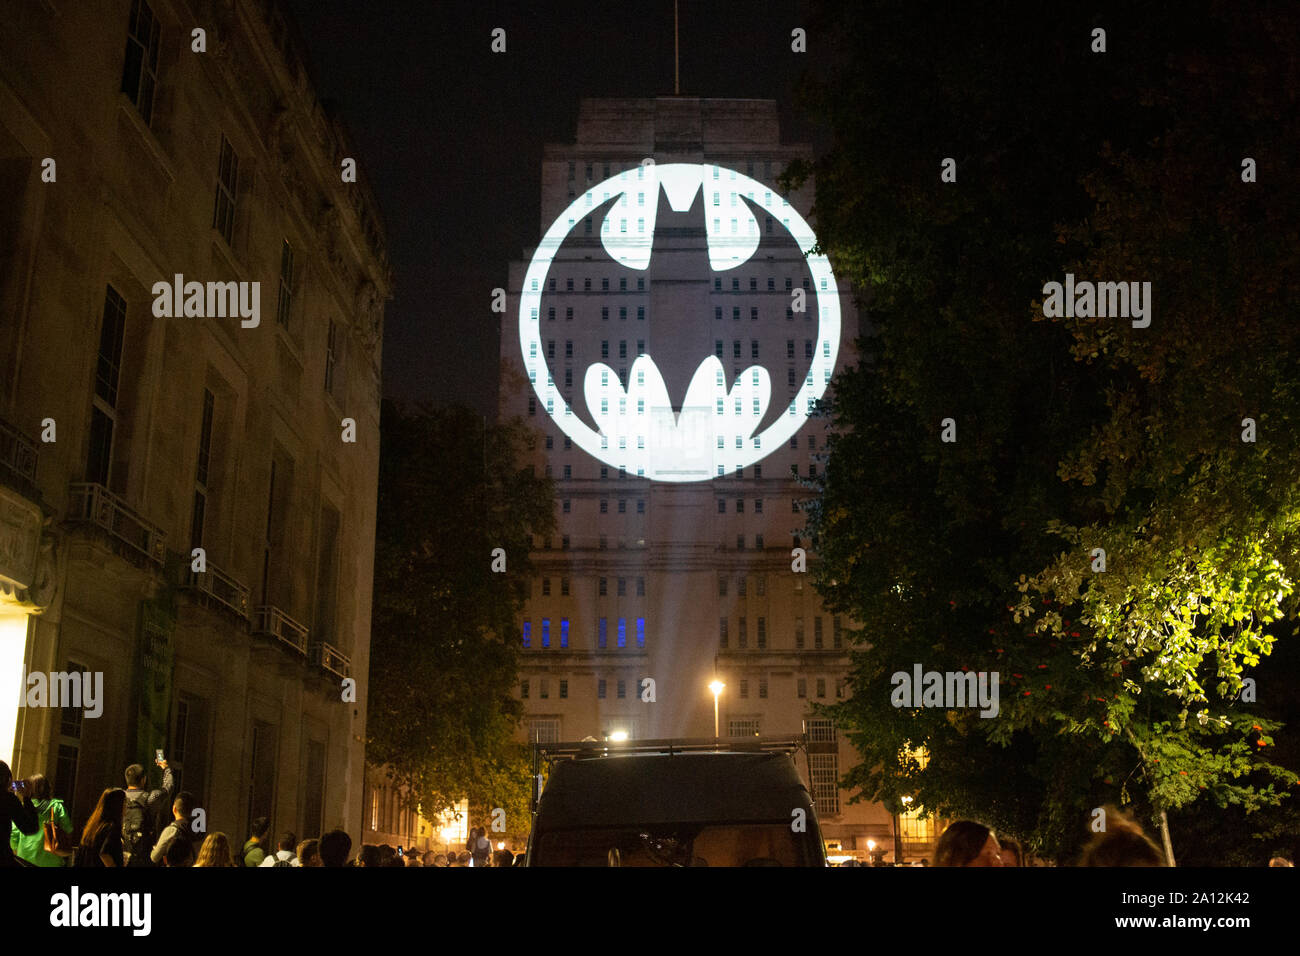 bat signal night light